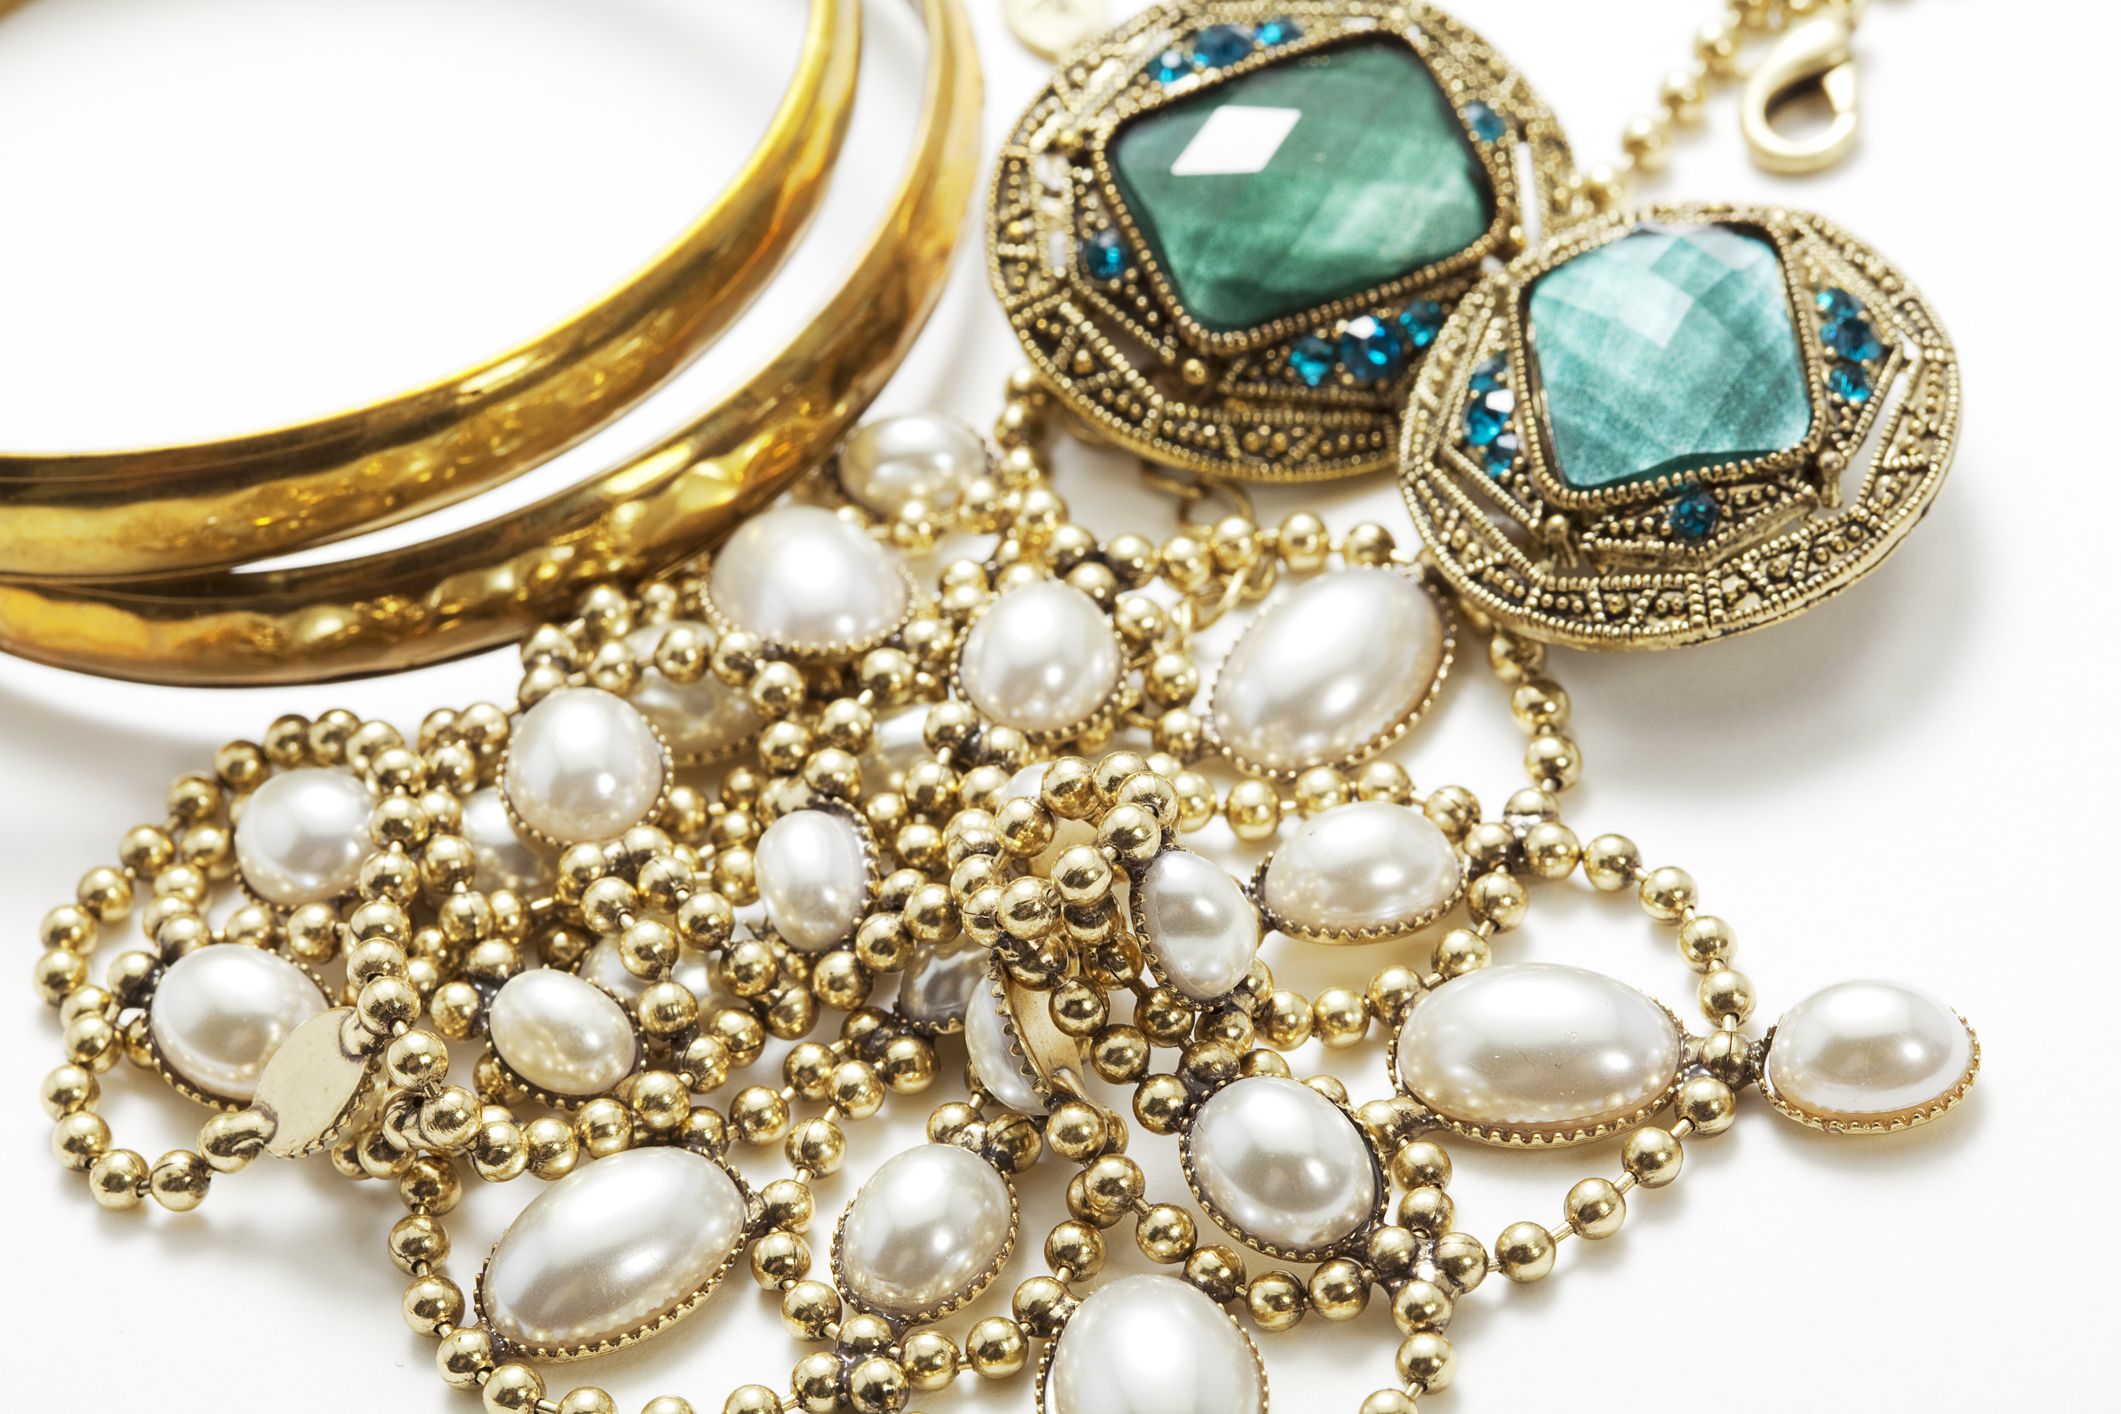 Brilliant Ideas: High-Jewelry Presentations Offer Plenty of